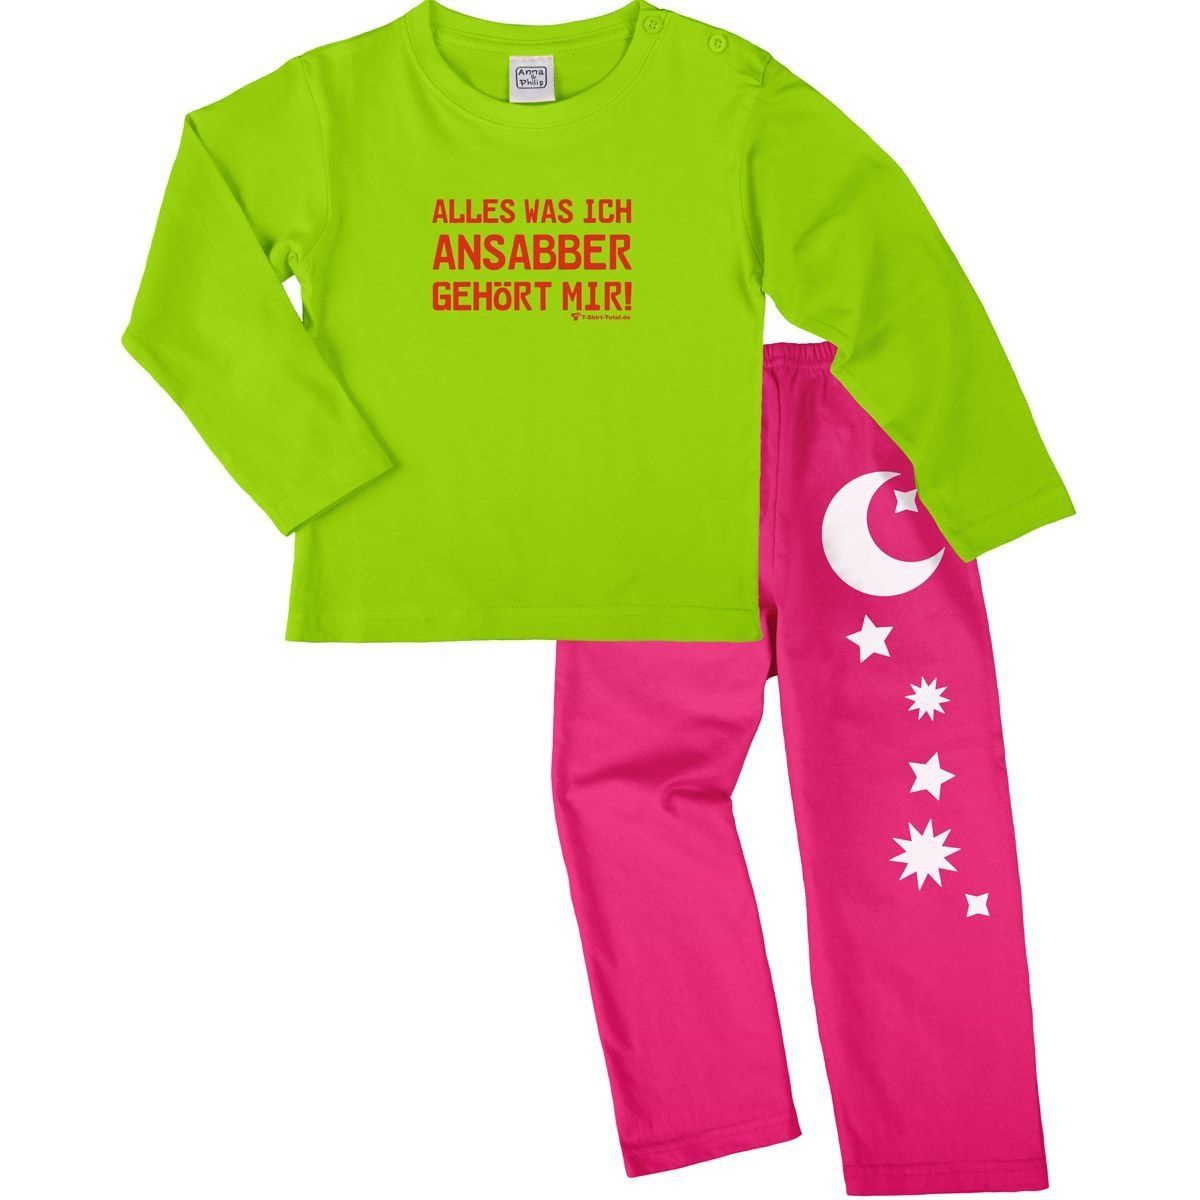 Ansabbern Pyjama Set hellgrün / pink 68 / 74